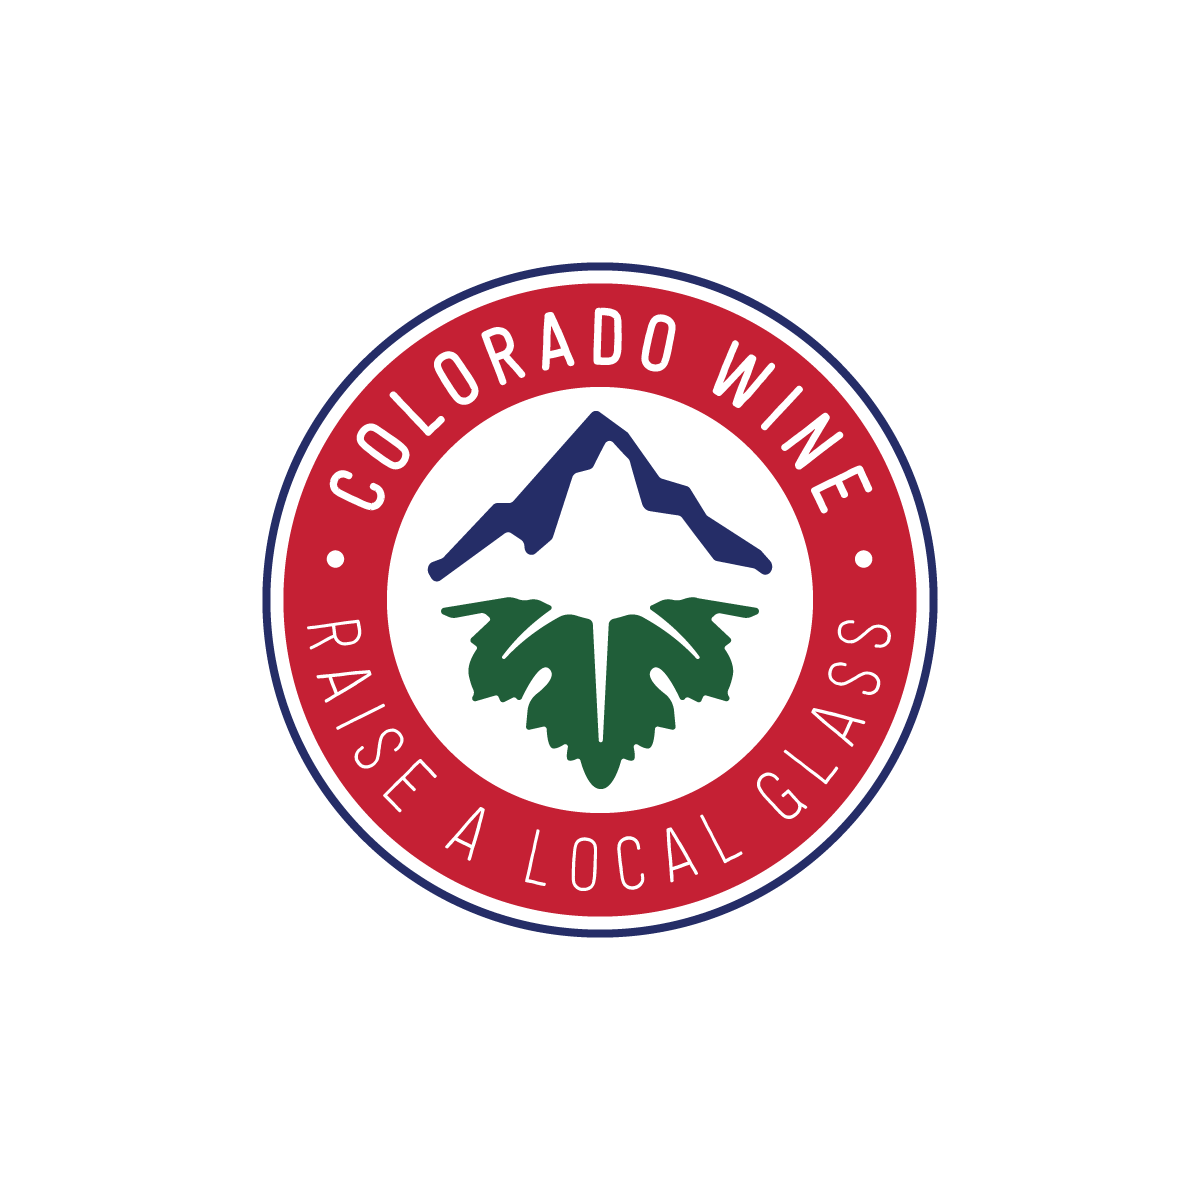 Colorado Wine Badge: Raise a local glass